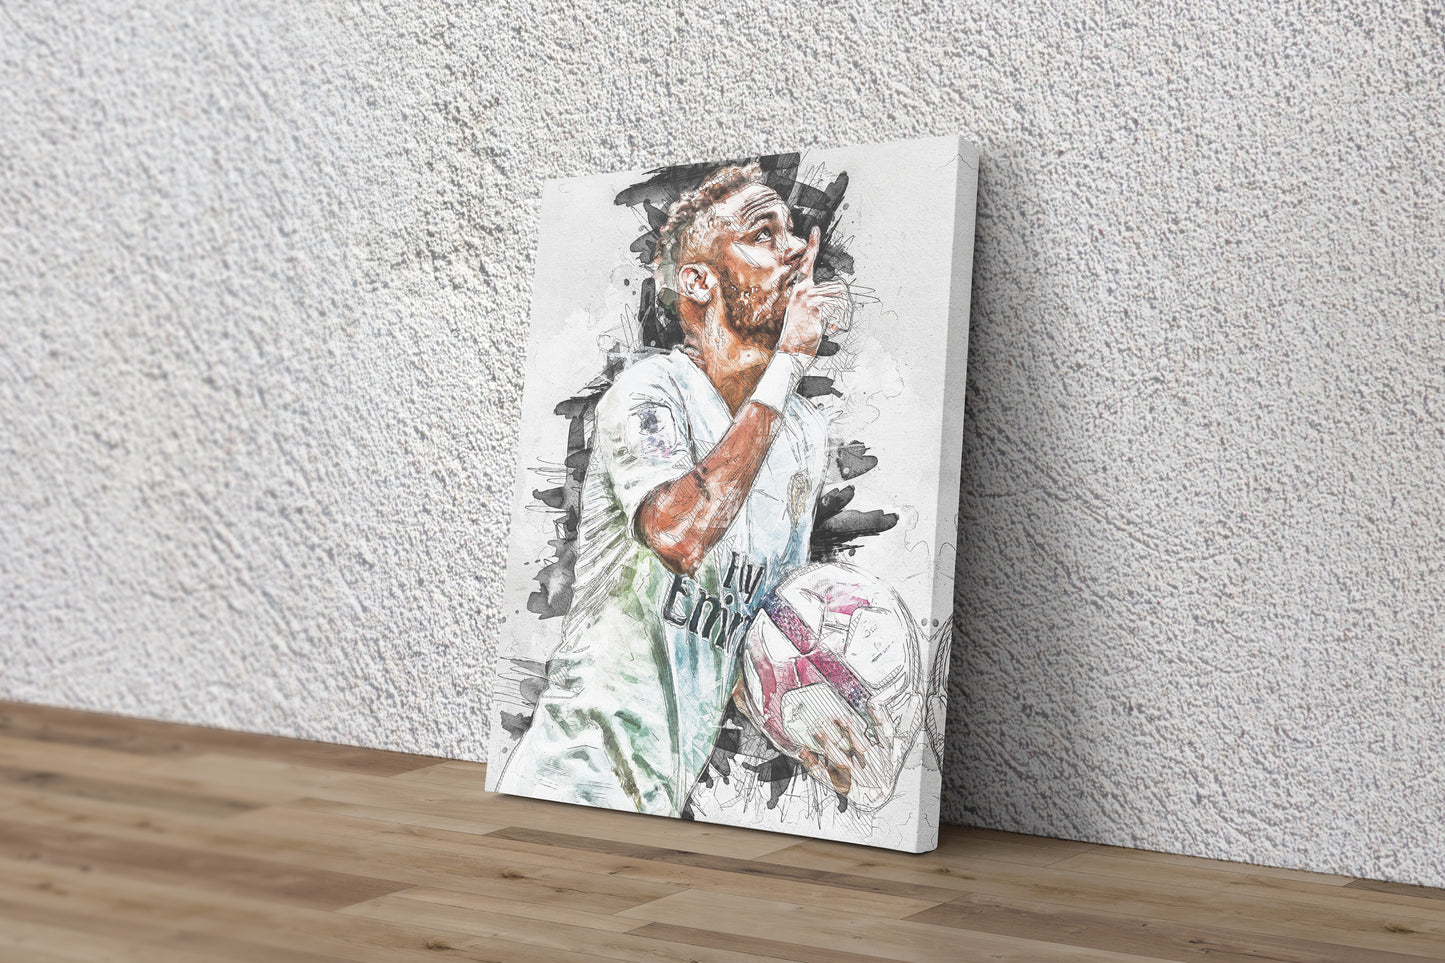 Neymar Poster Paris Saint Germain Soccer Painting Hand Made Posters Canvas Print Kids Wall Art Man Cave Gift Home Decor